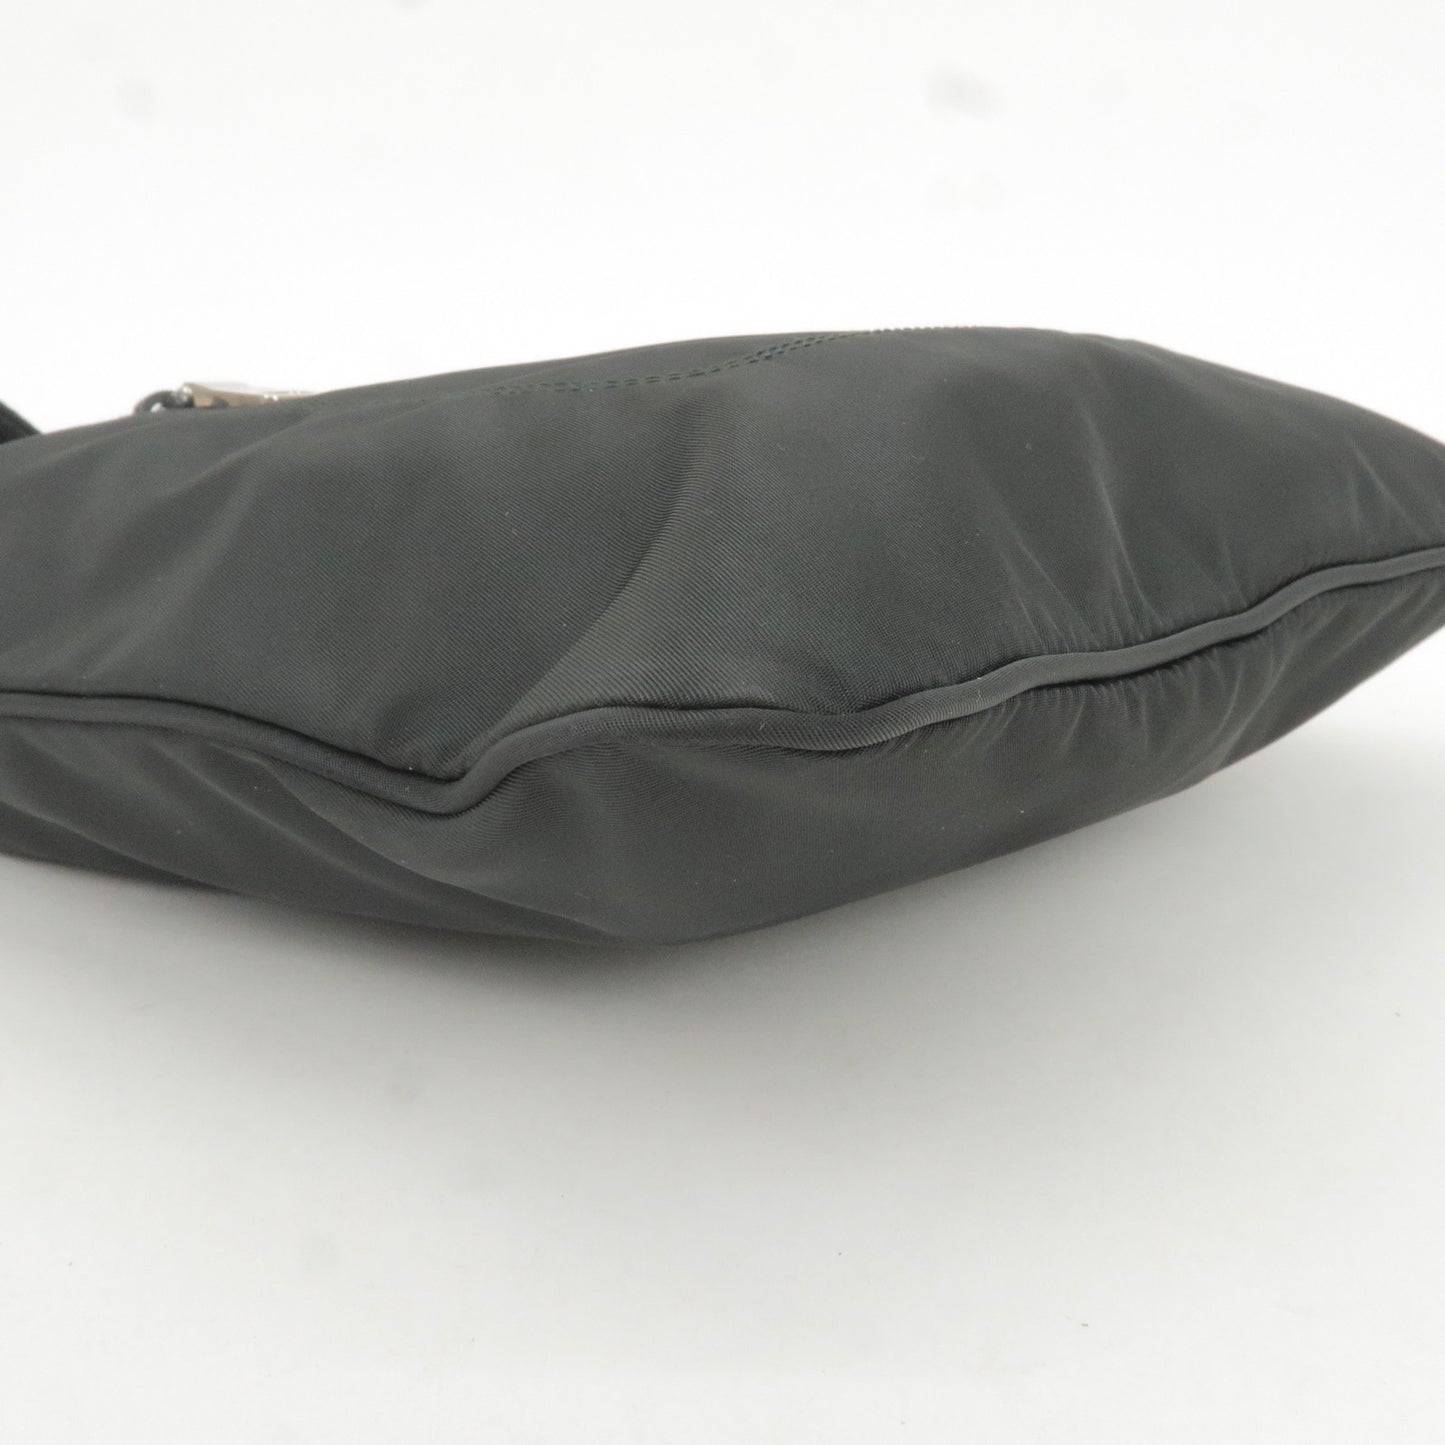 PRADA Logo Nylon Leather Shoulder Bag Black Detachable Strap